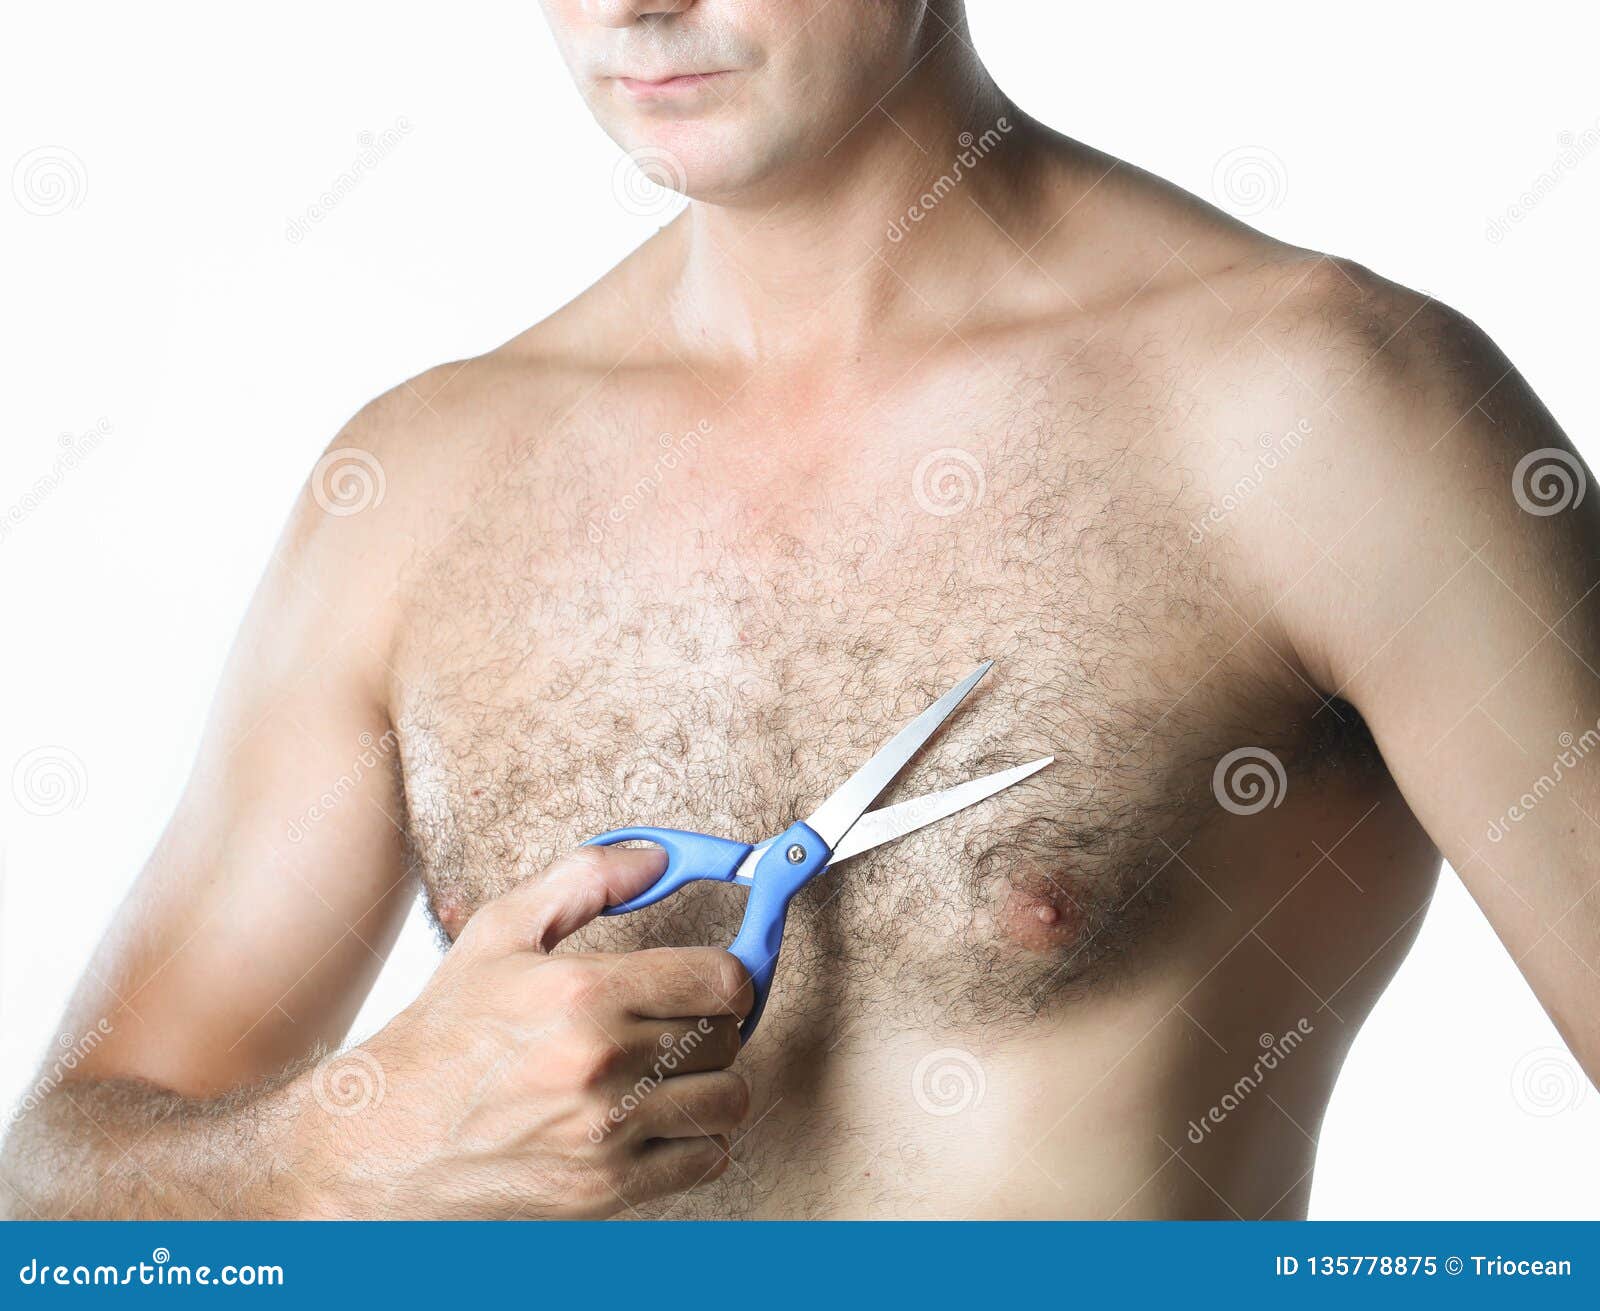 эпиляция груди у мужчин фото 109